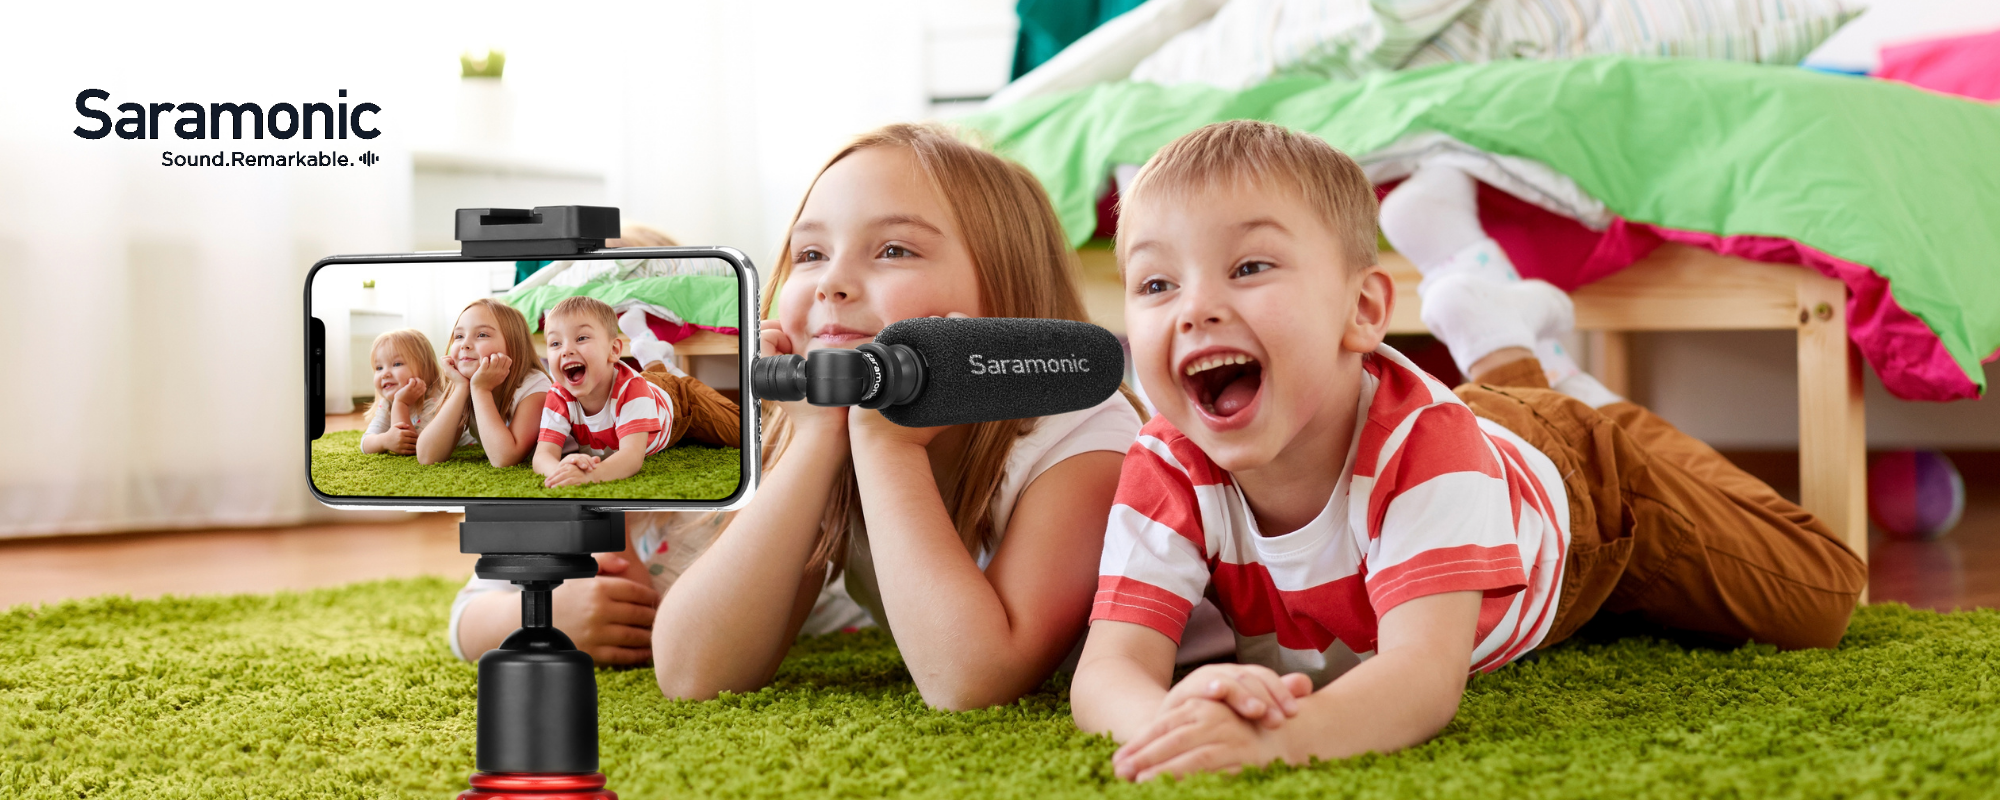 Saramonic SmartMic5 shotgunc microphone for mobile devices